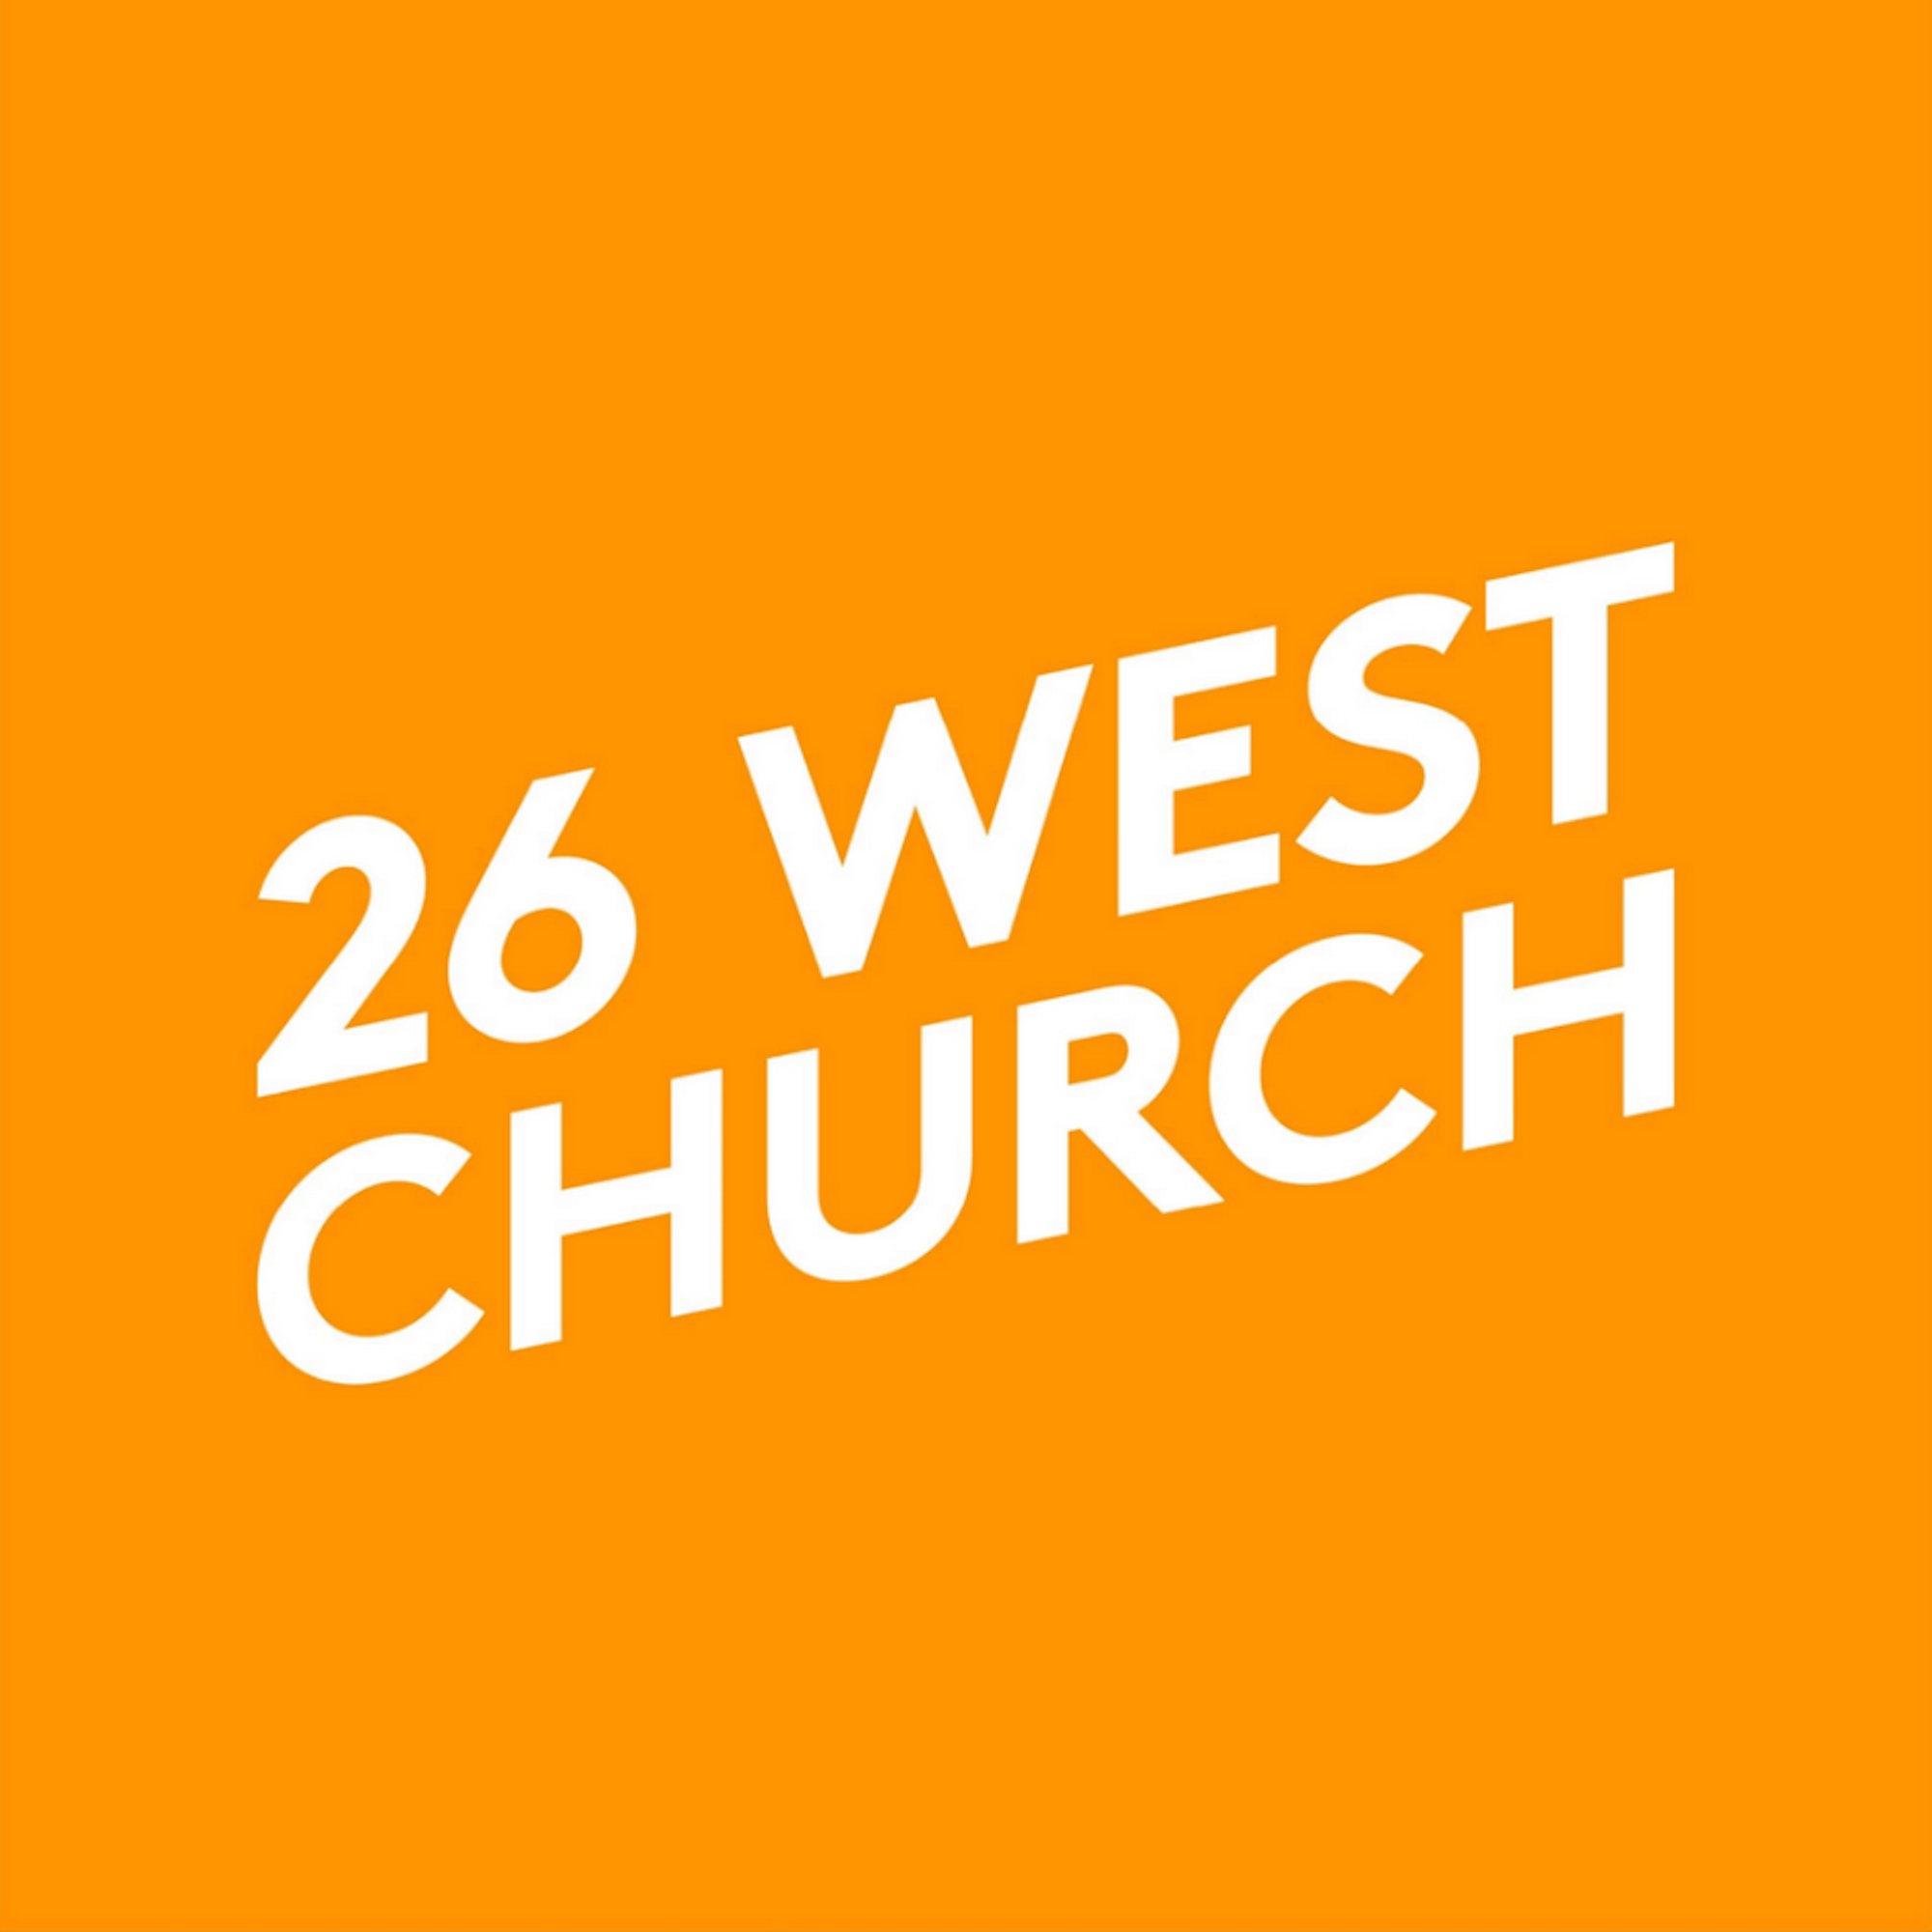 26 West Church: Audio Podcast